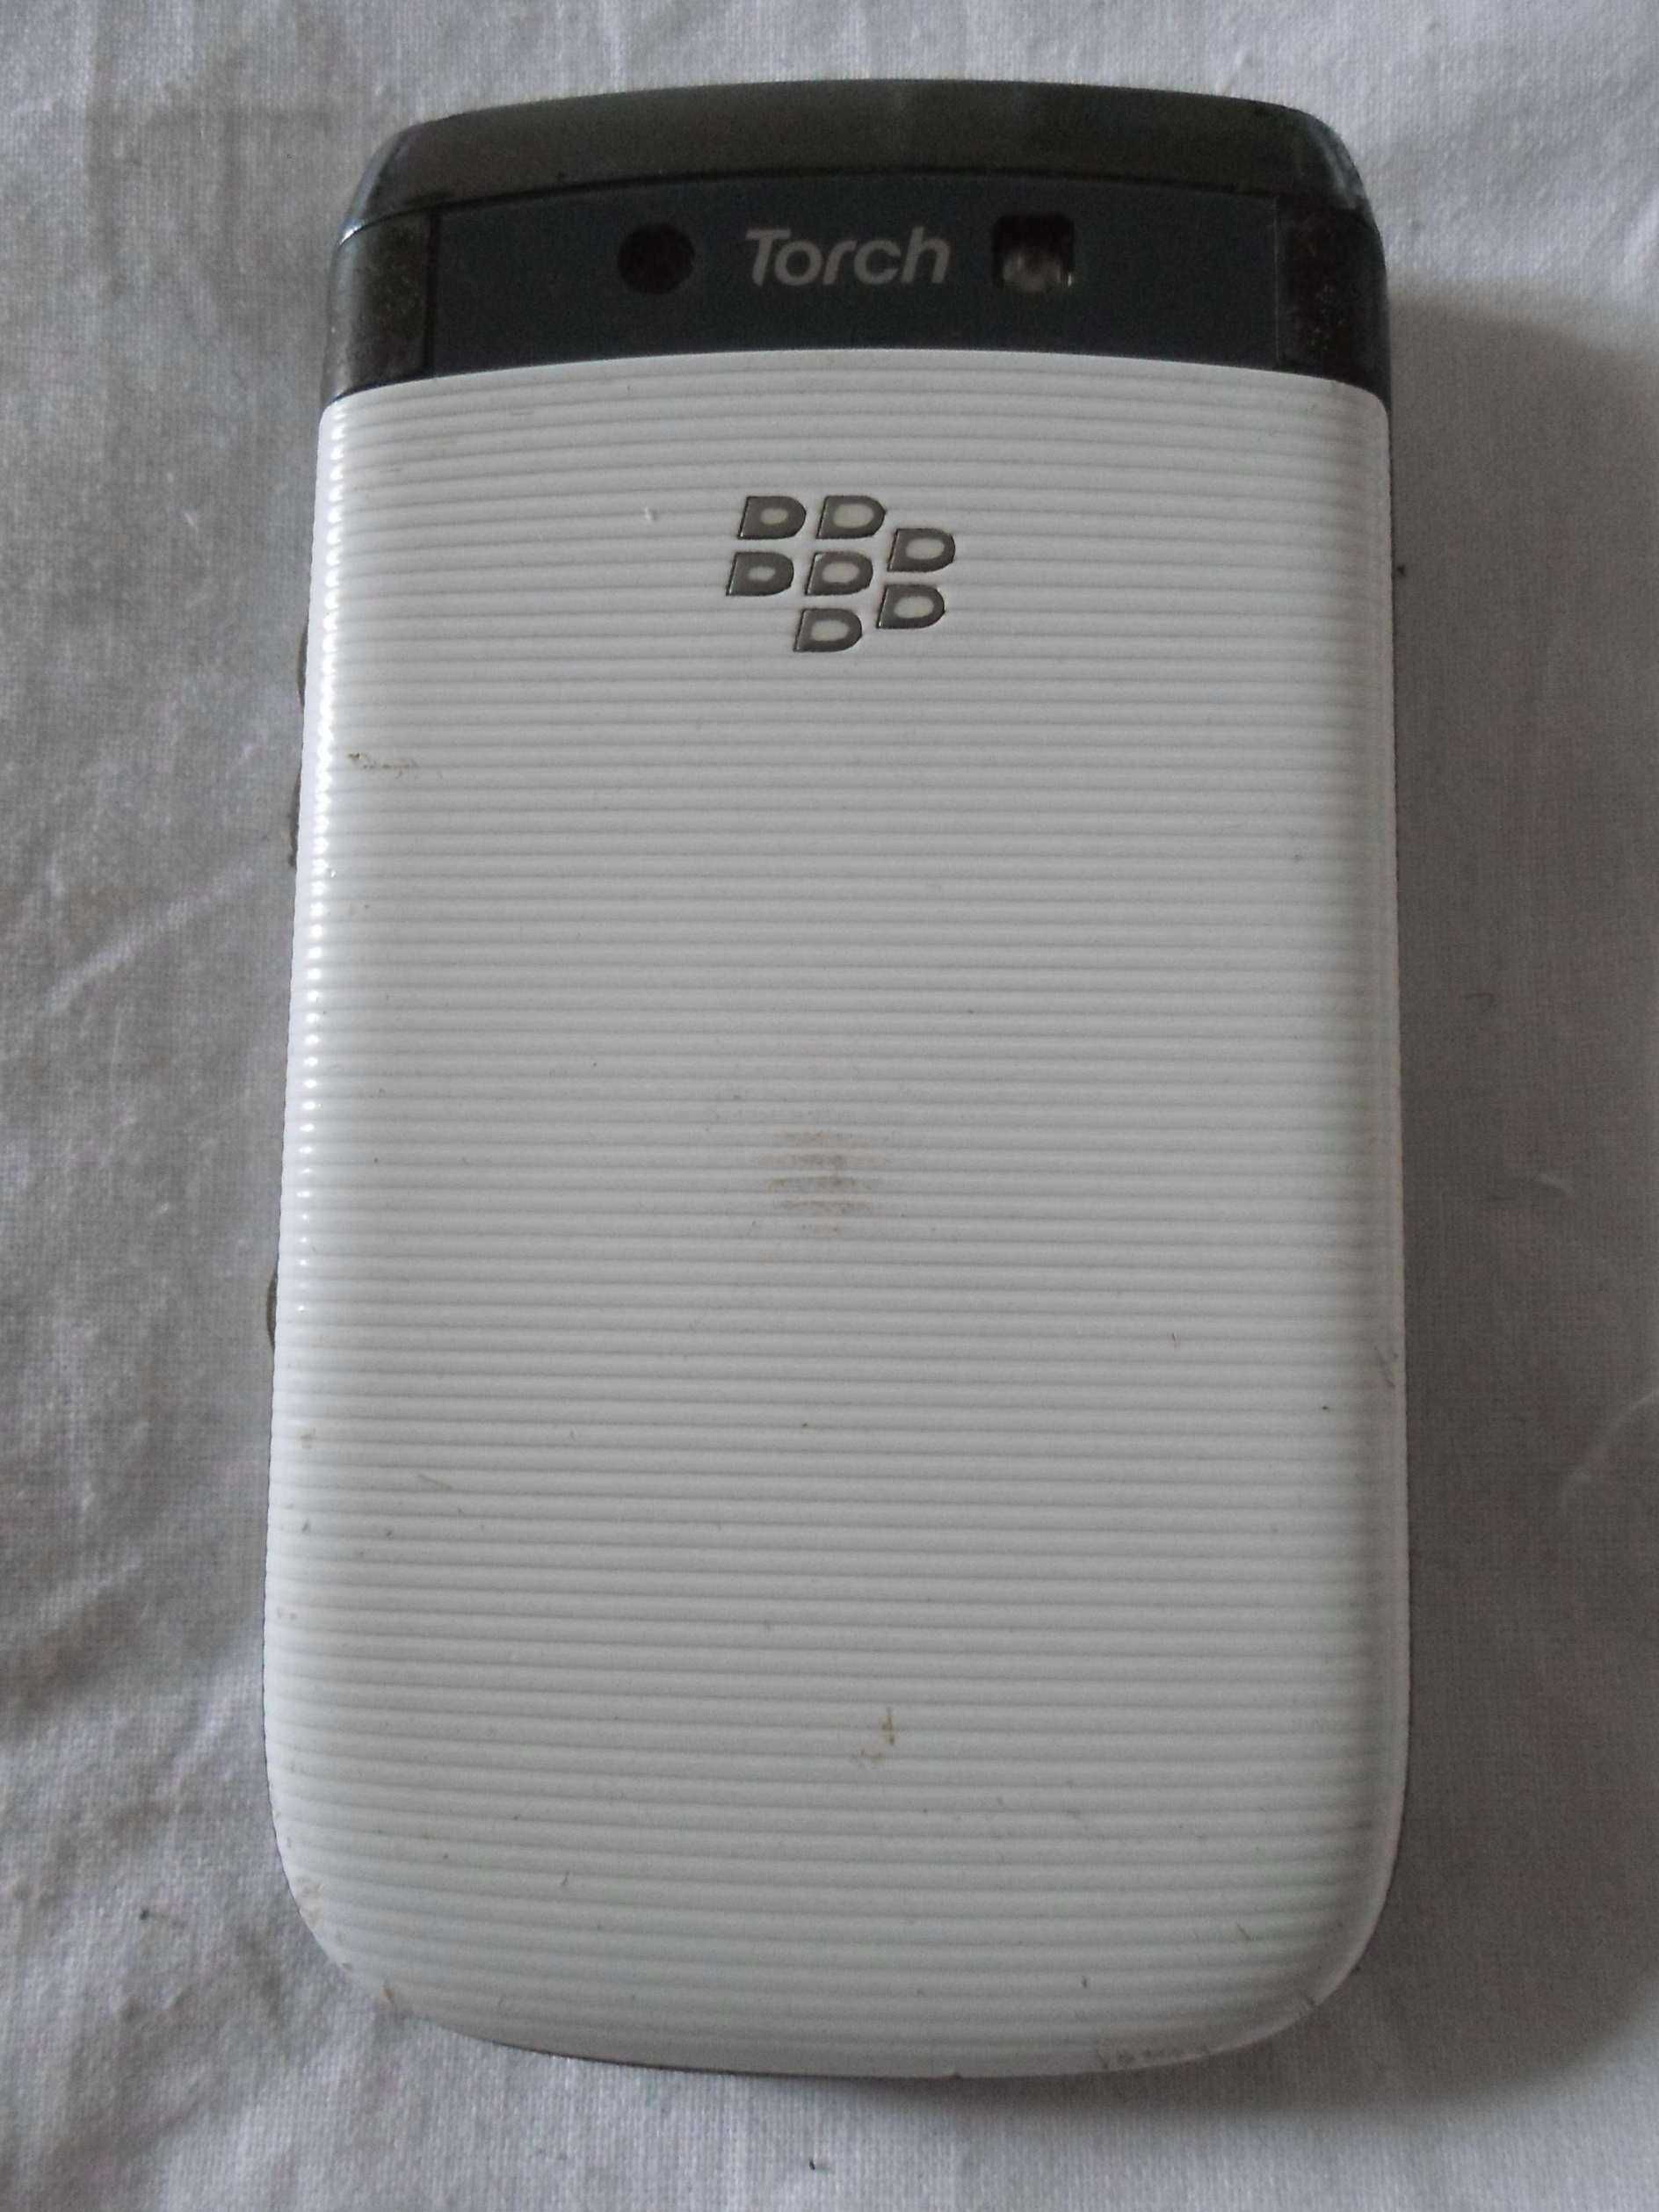 Nokia RM-1190, Siemens C75, Nomi i182, BlackBerry 9800